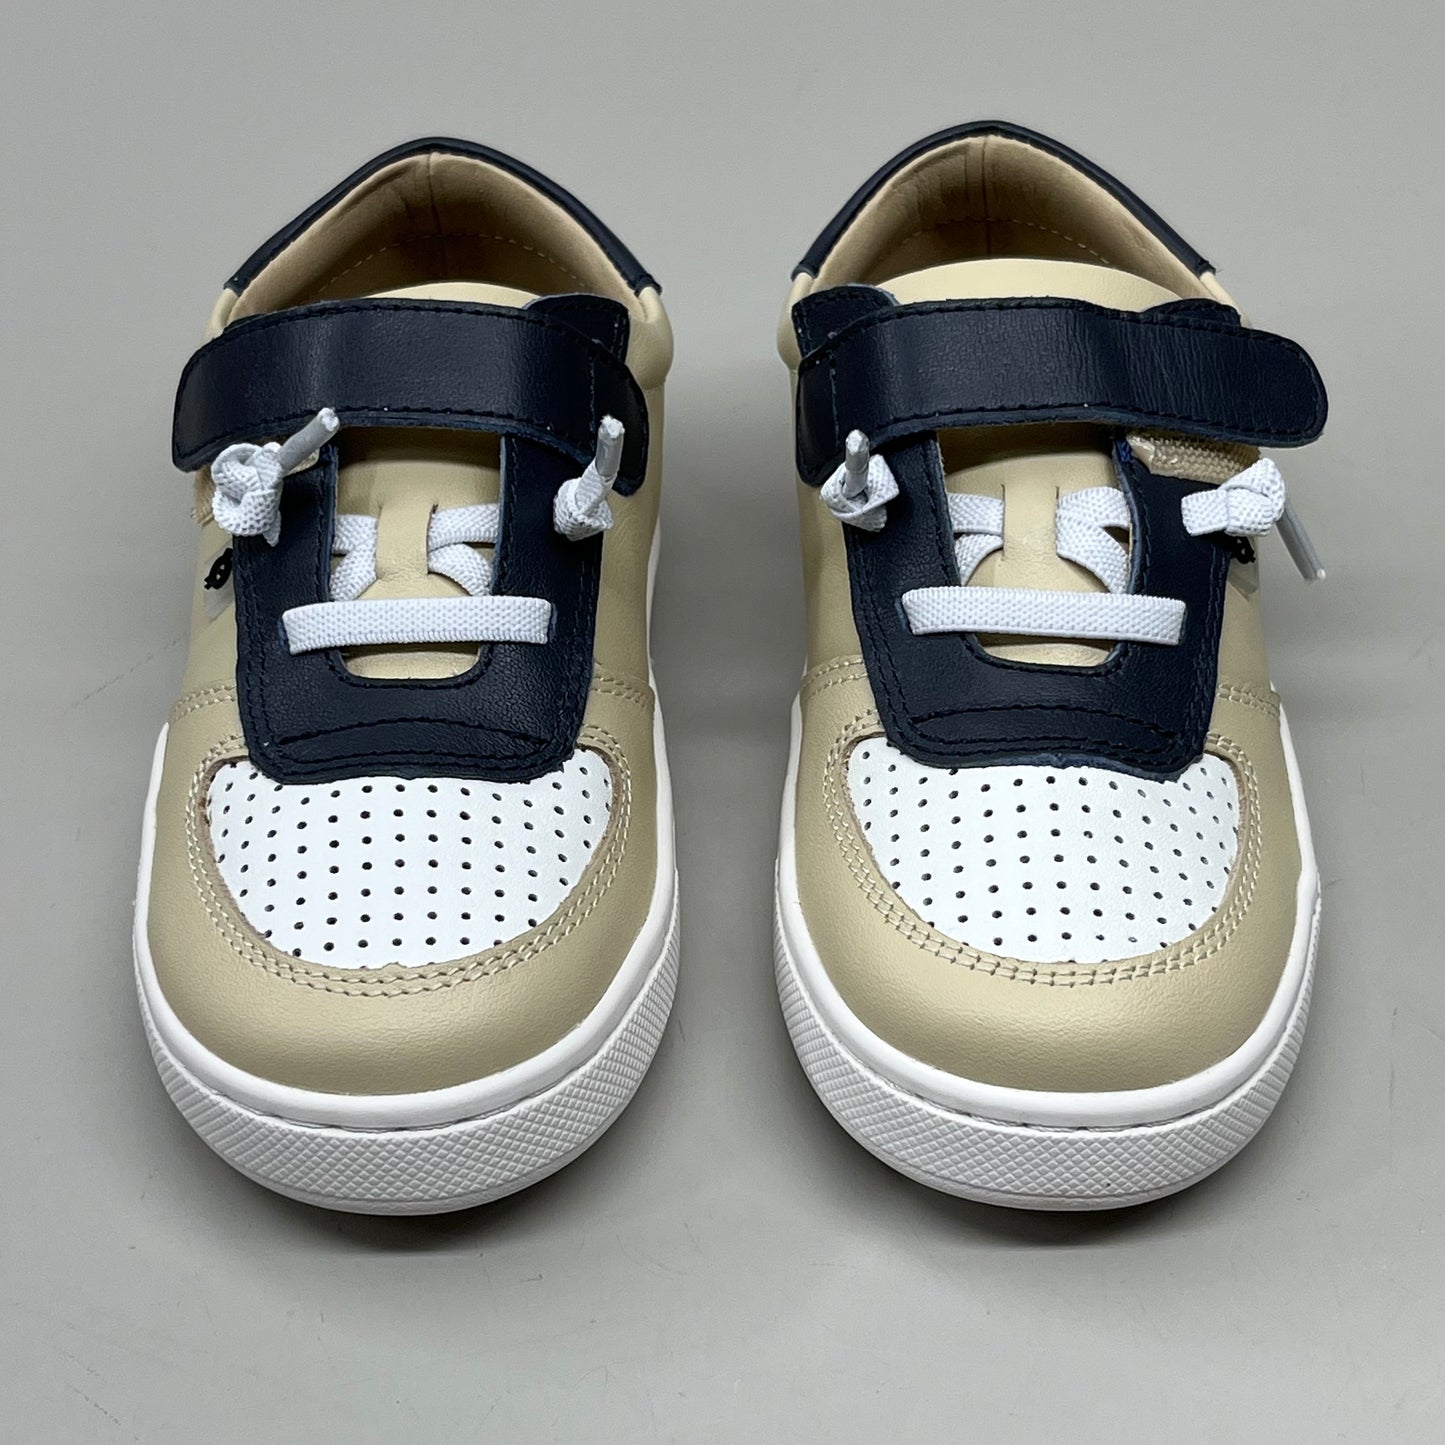 OLD SOLES Runsky Sneakers Leather Shoe Kid’s Sz 26 US 9.5 Cream/Navy/Snow #6135